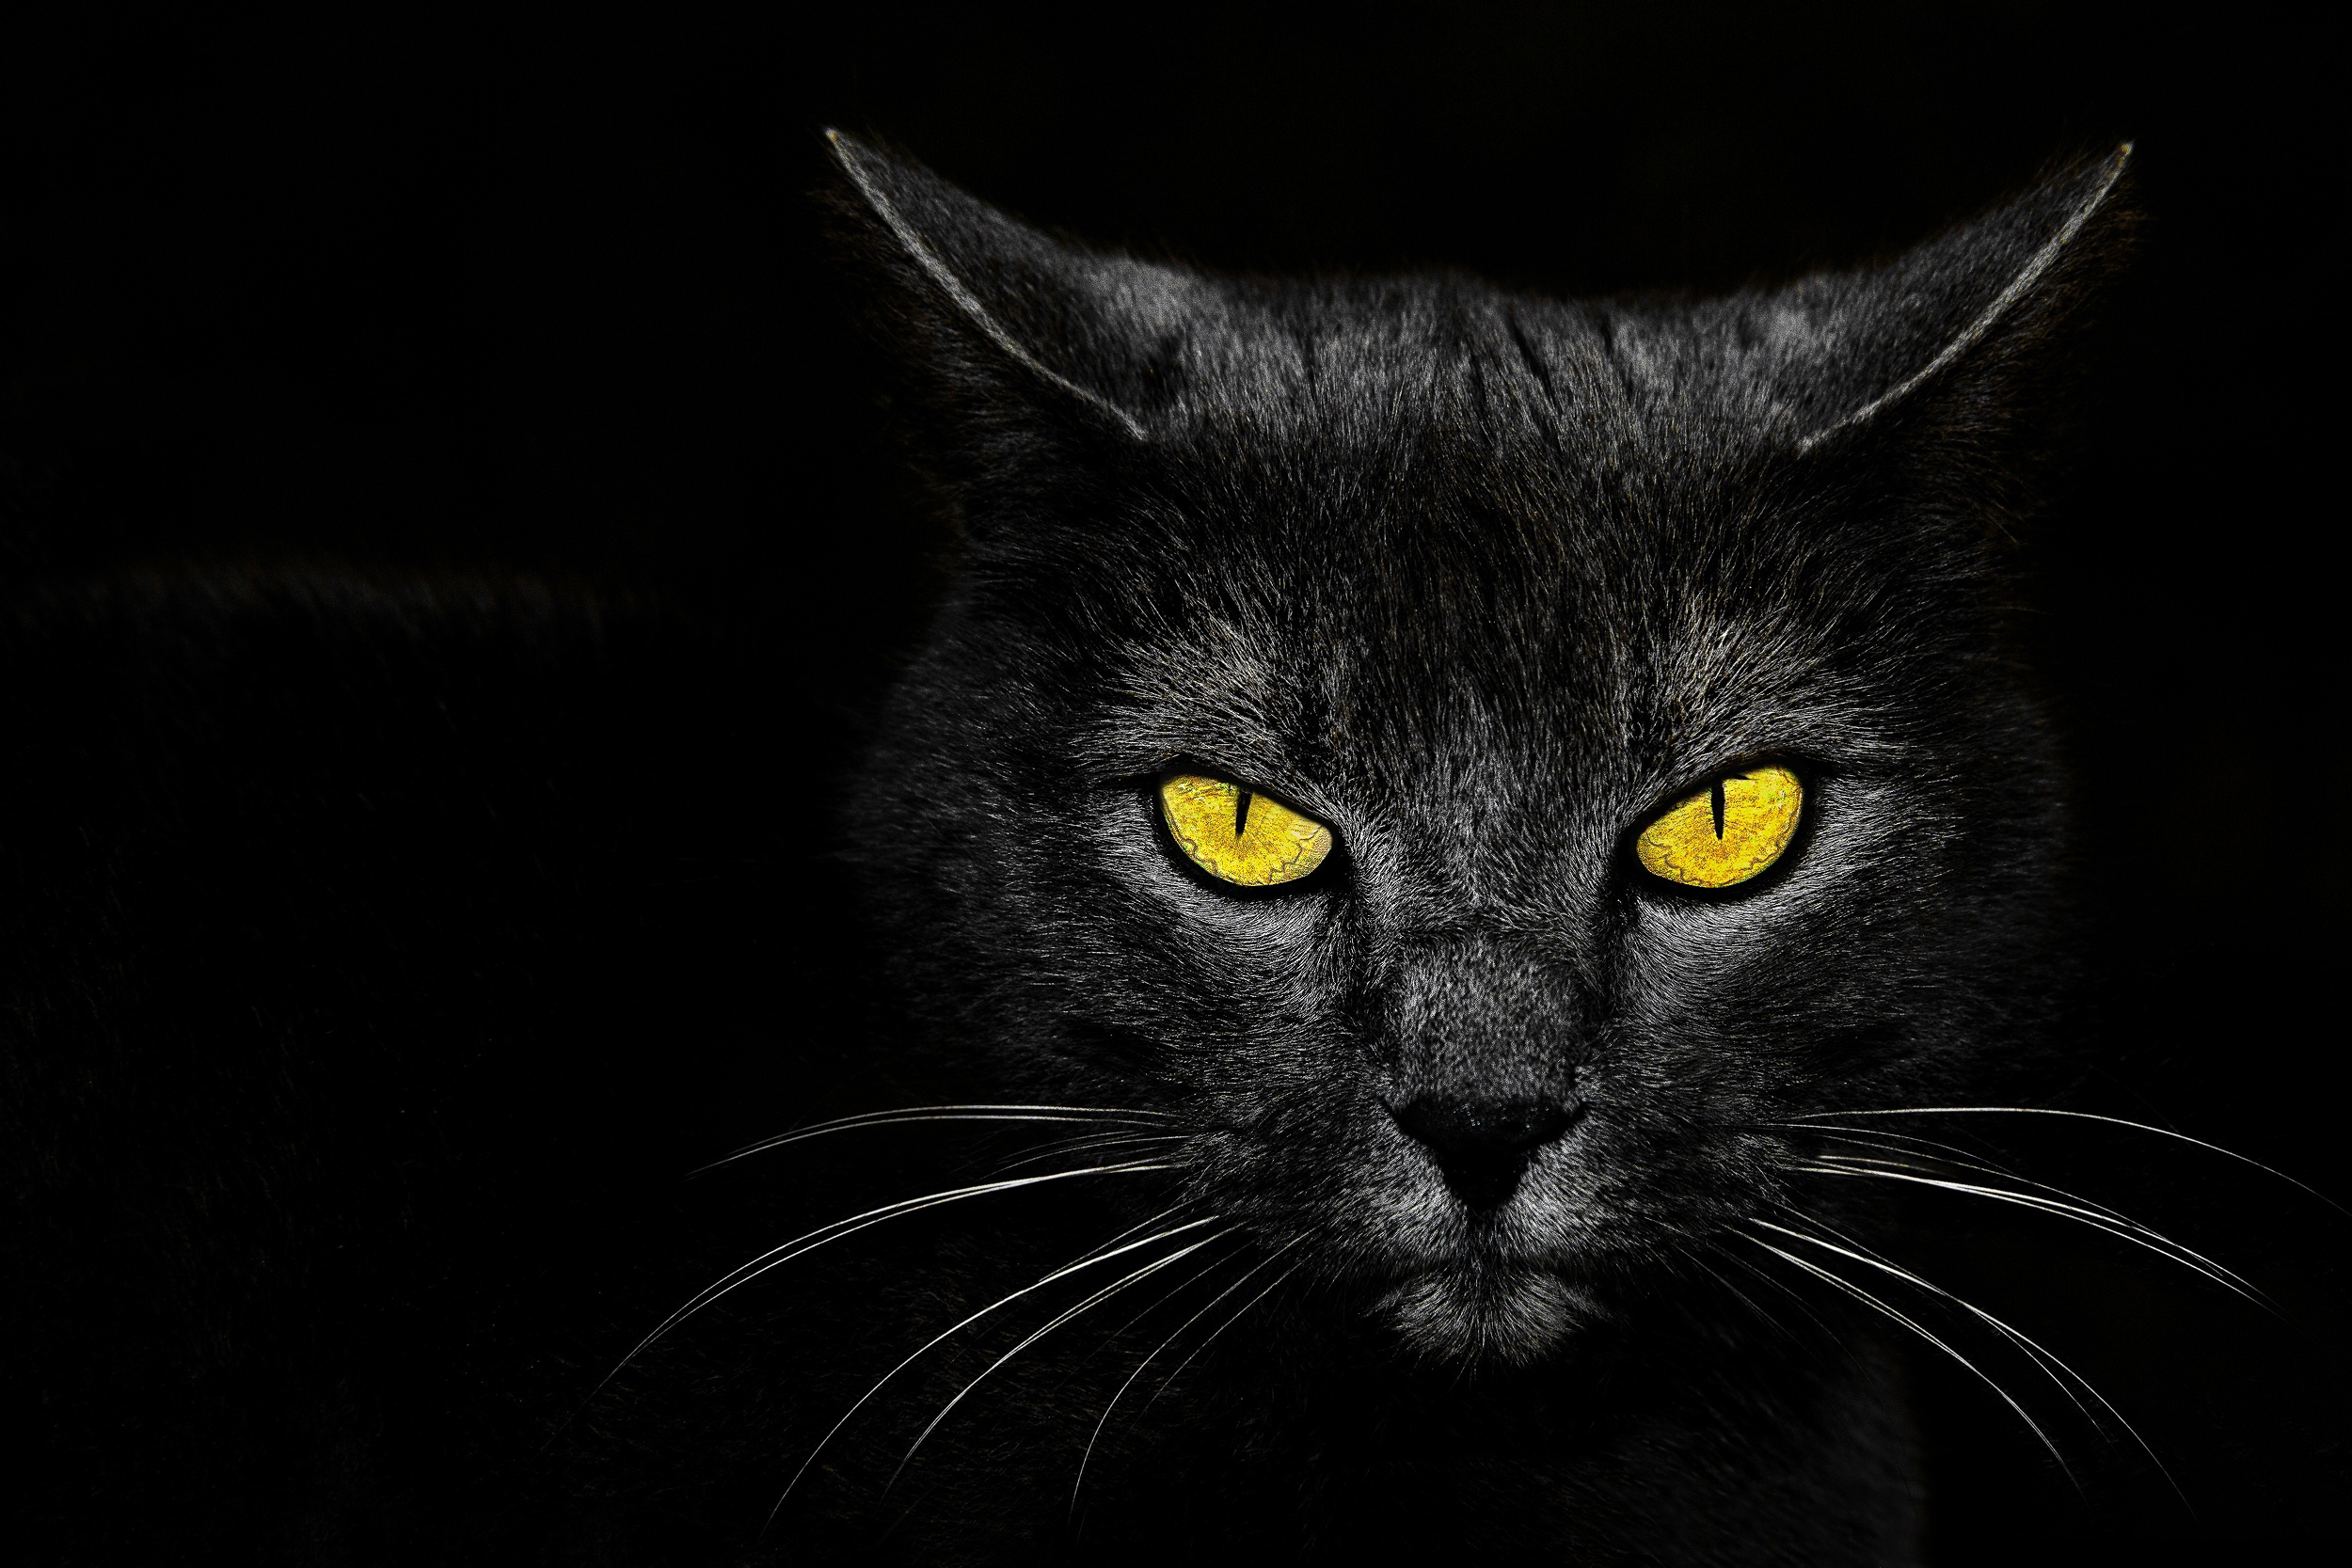  Kill Wallpaper black cat eyes background HD Wallpapers Photo